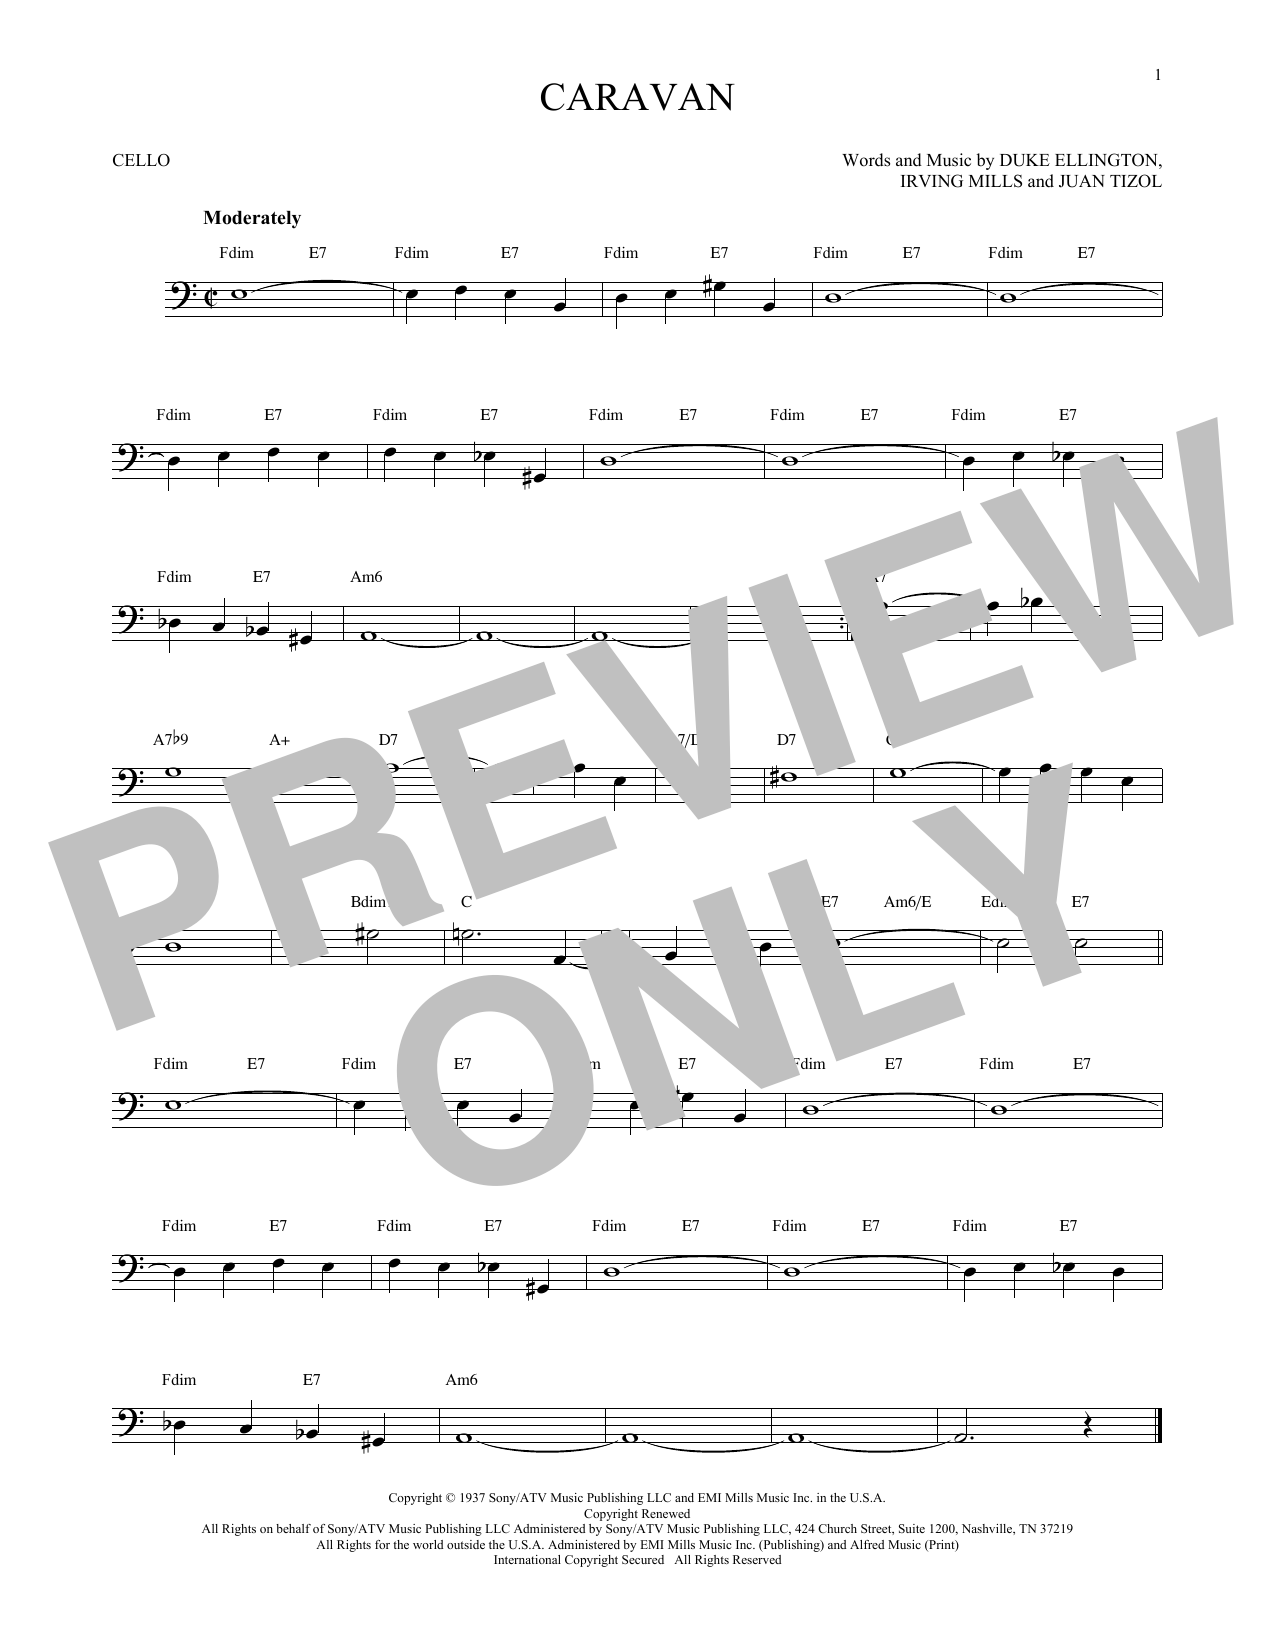 Juan Tizol & Duke Ellington Caravan Sheet Music Notes & Chords for Flute - Download or Print PDF